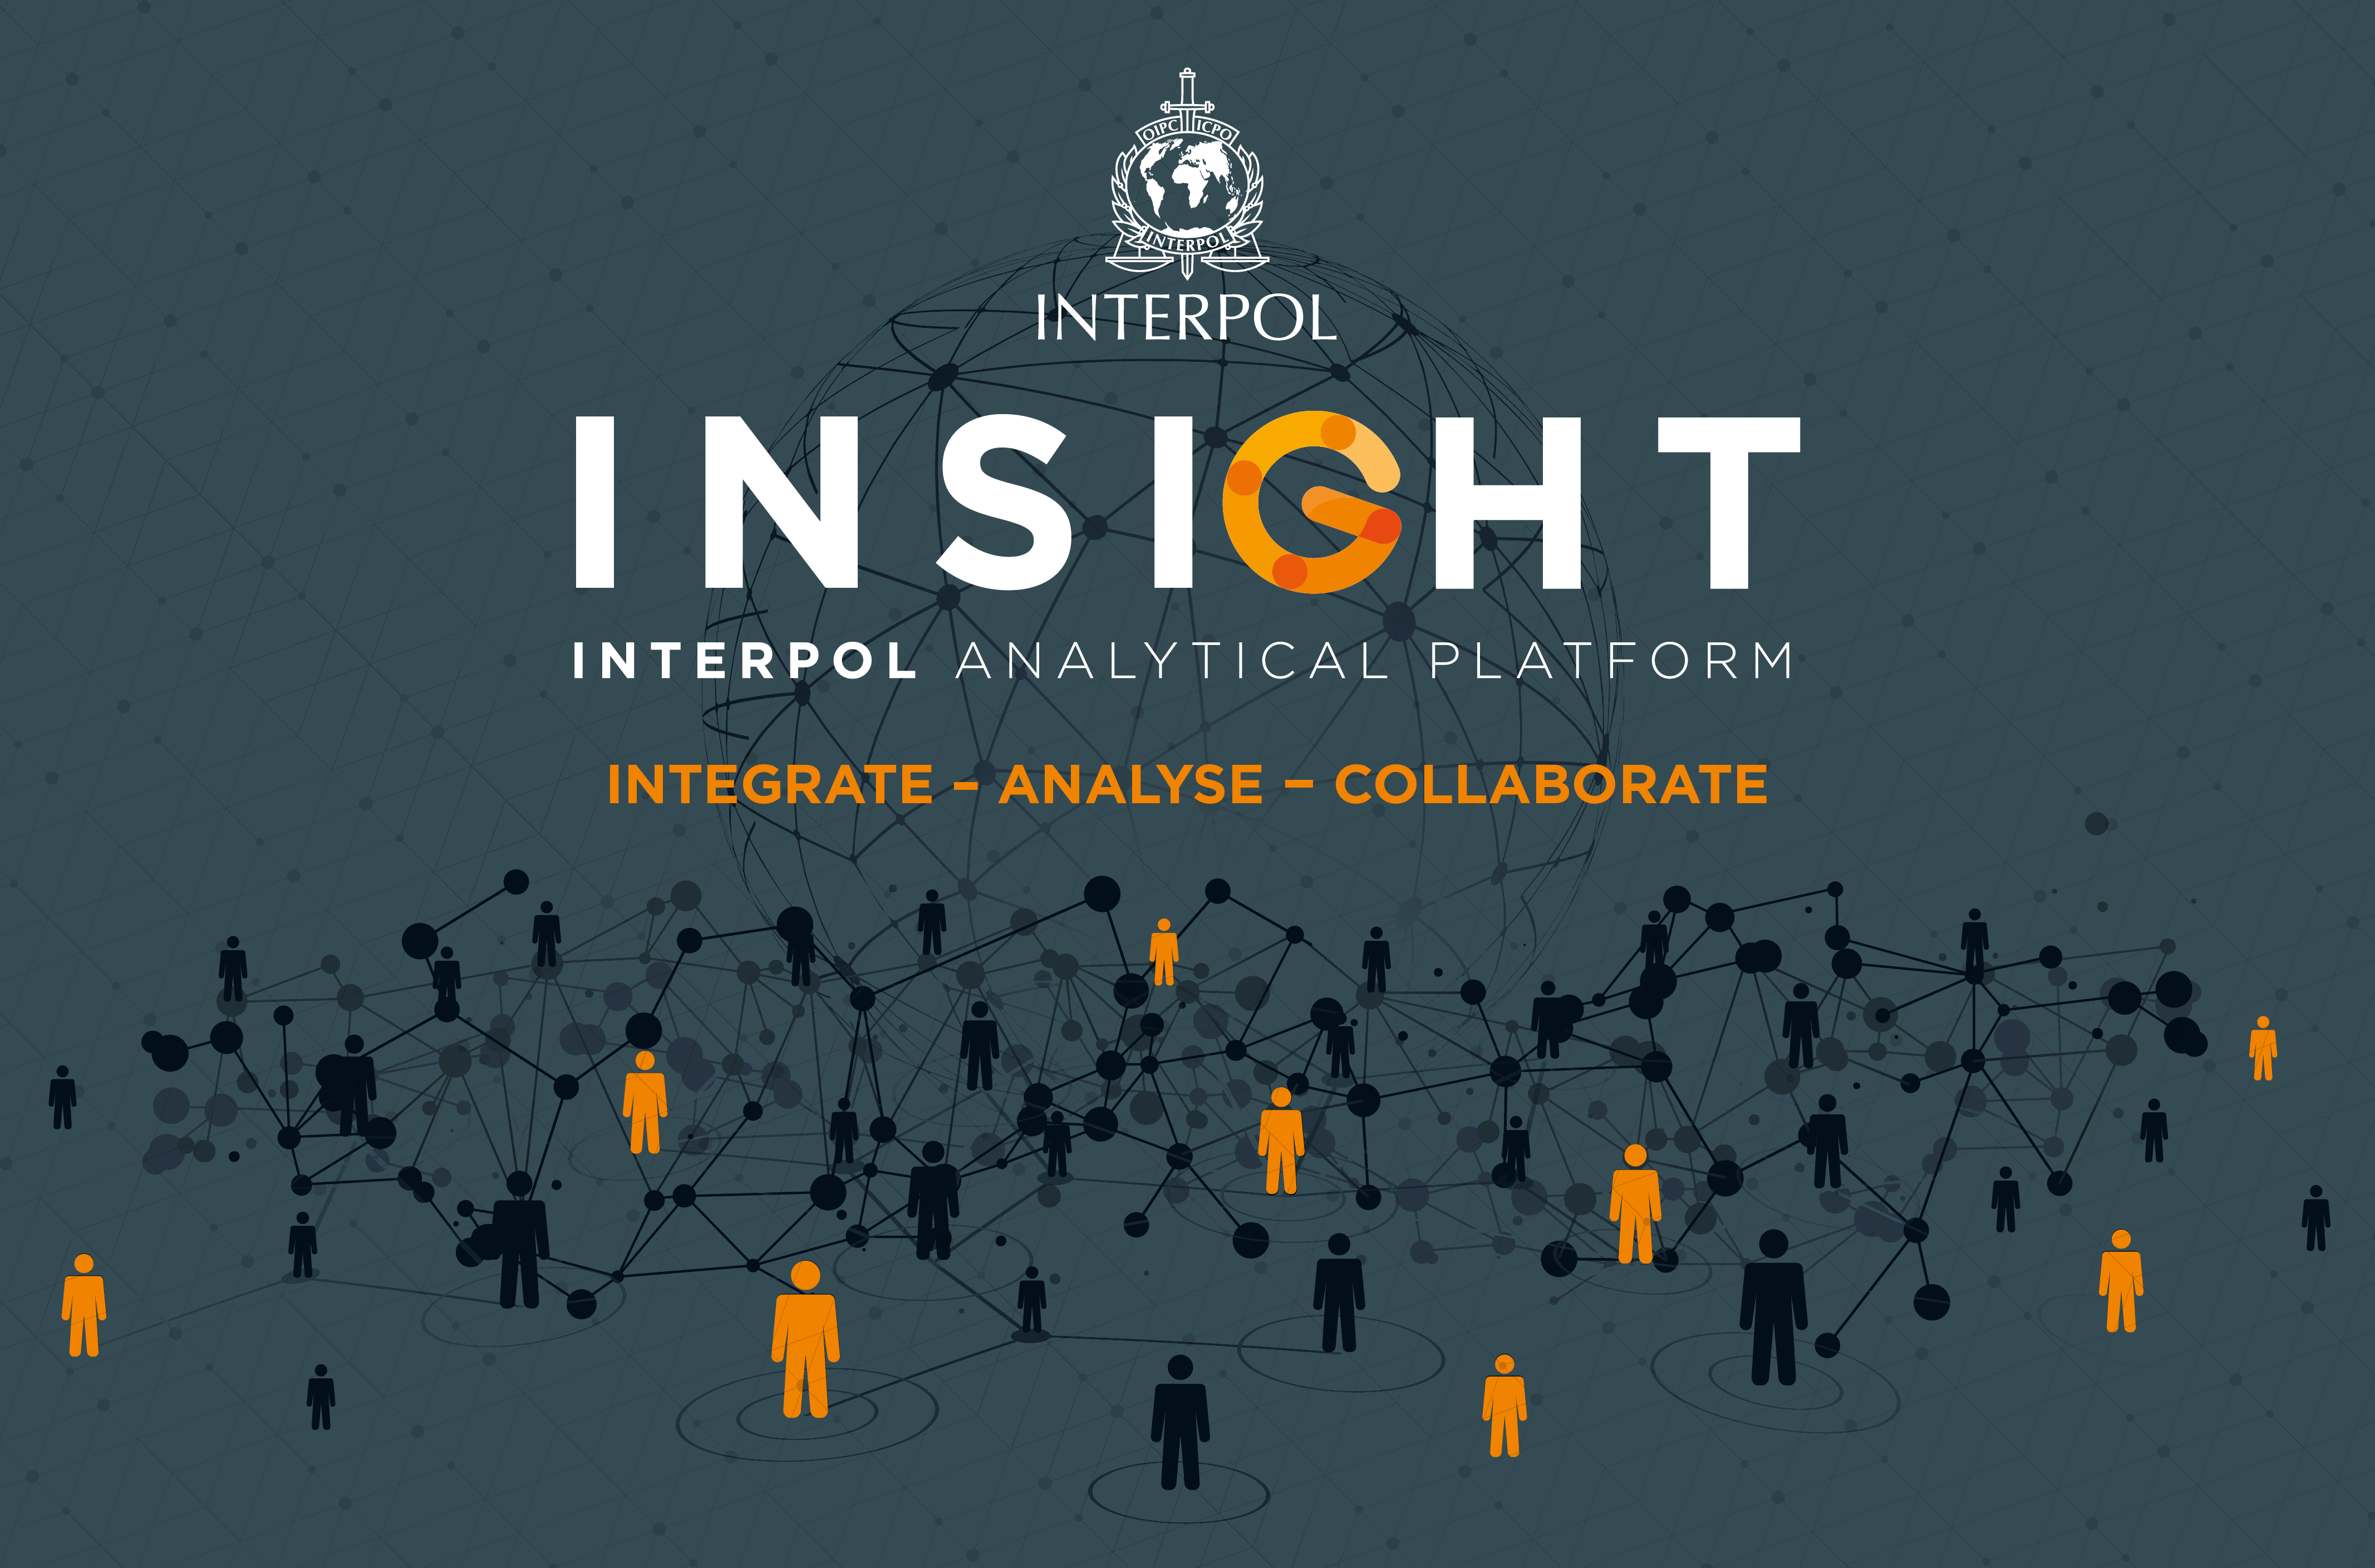 Interpol Insight